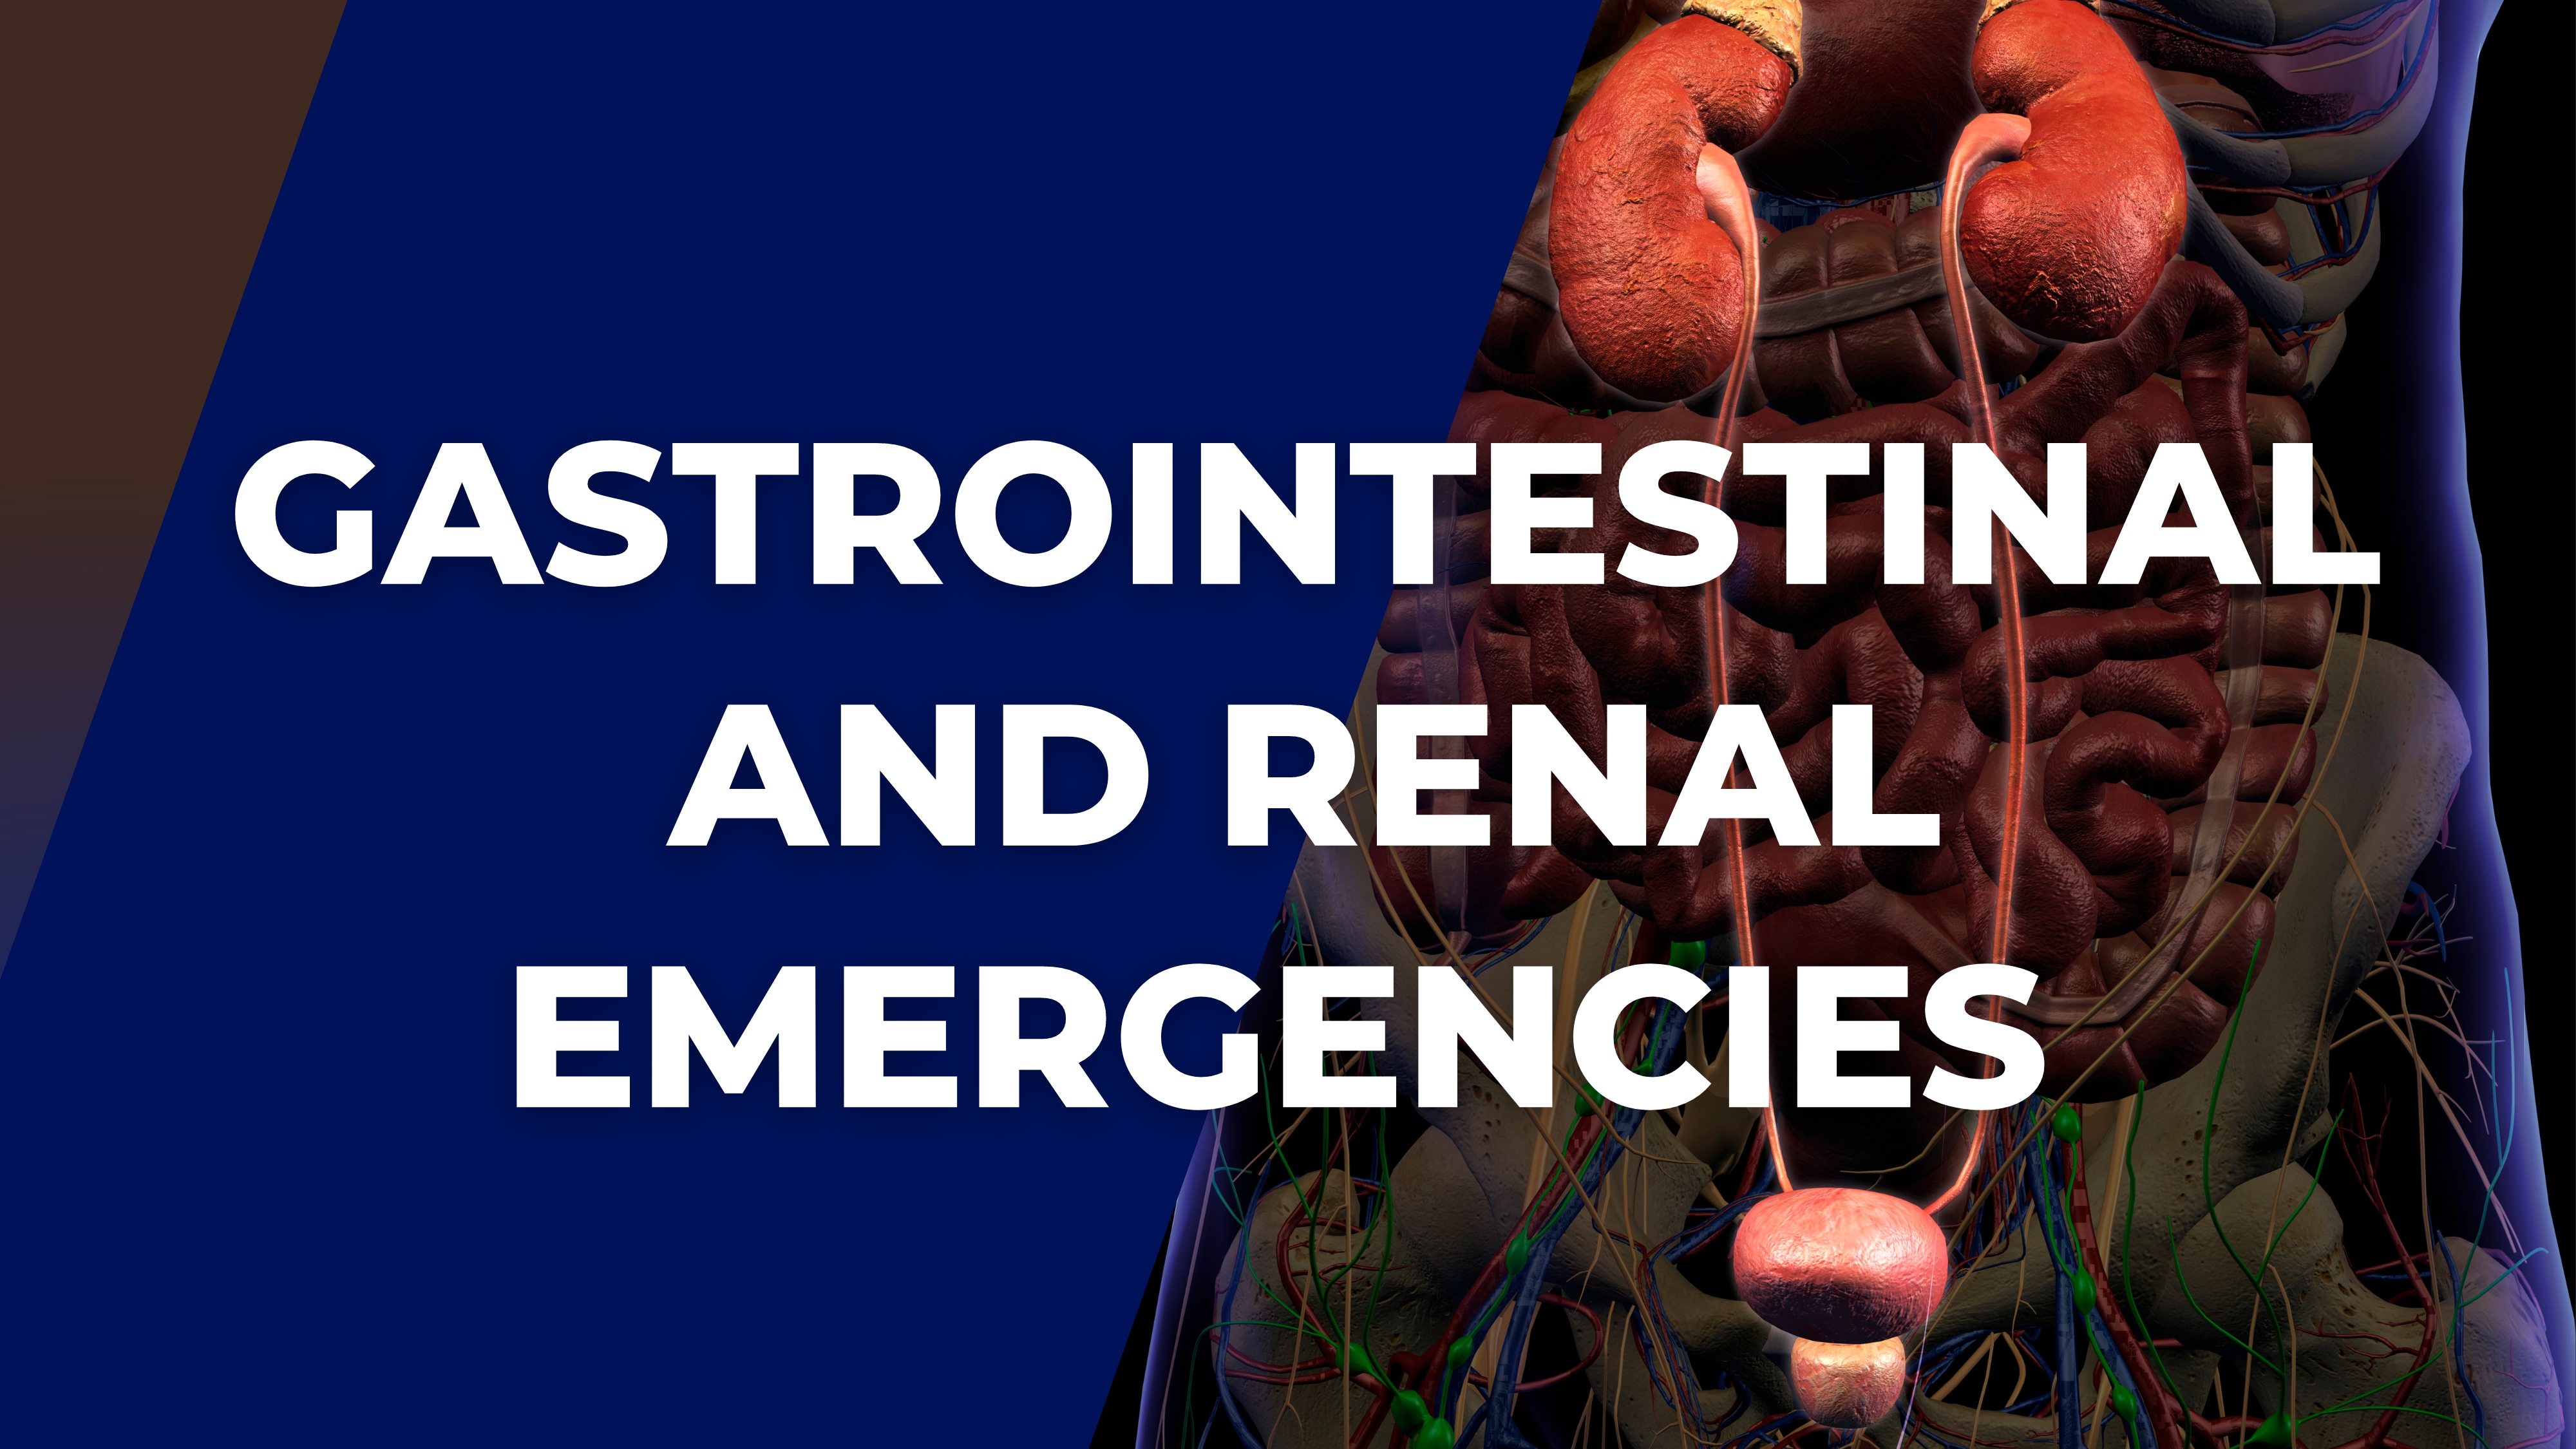 Gastrointestinal and renal emergencies